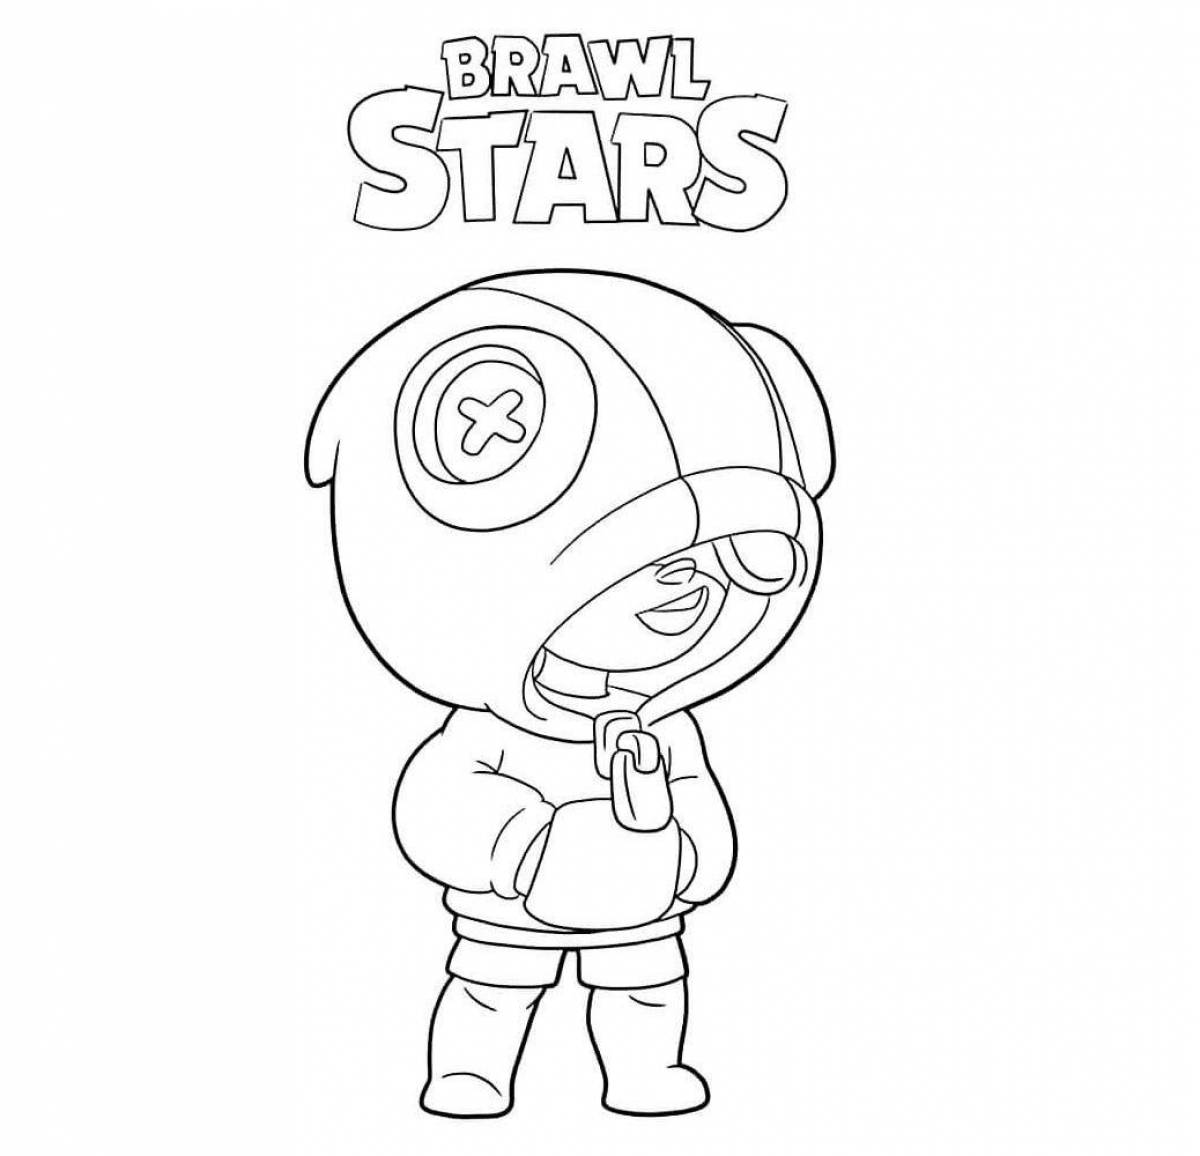 Playful brawl stars coloring page